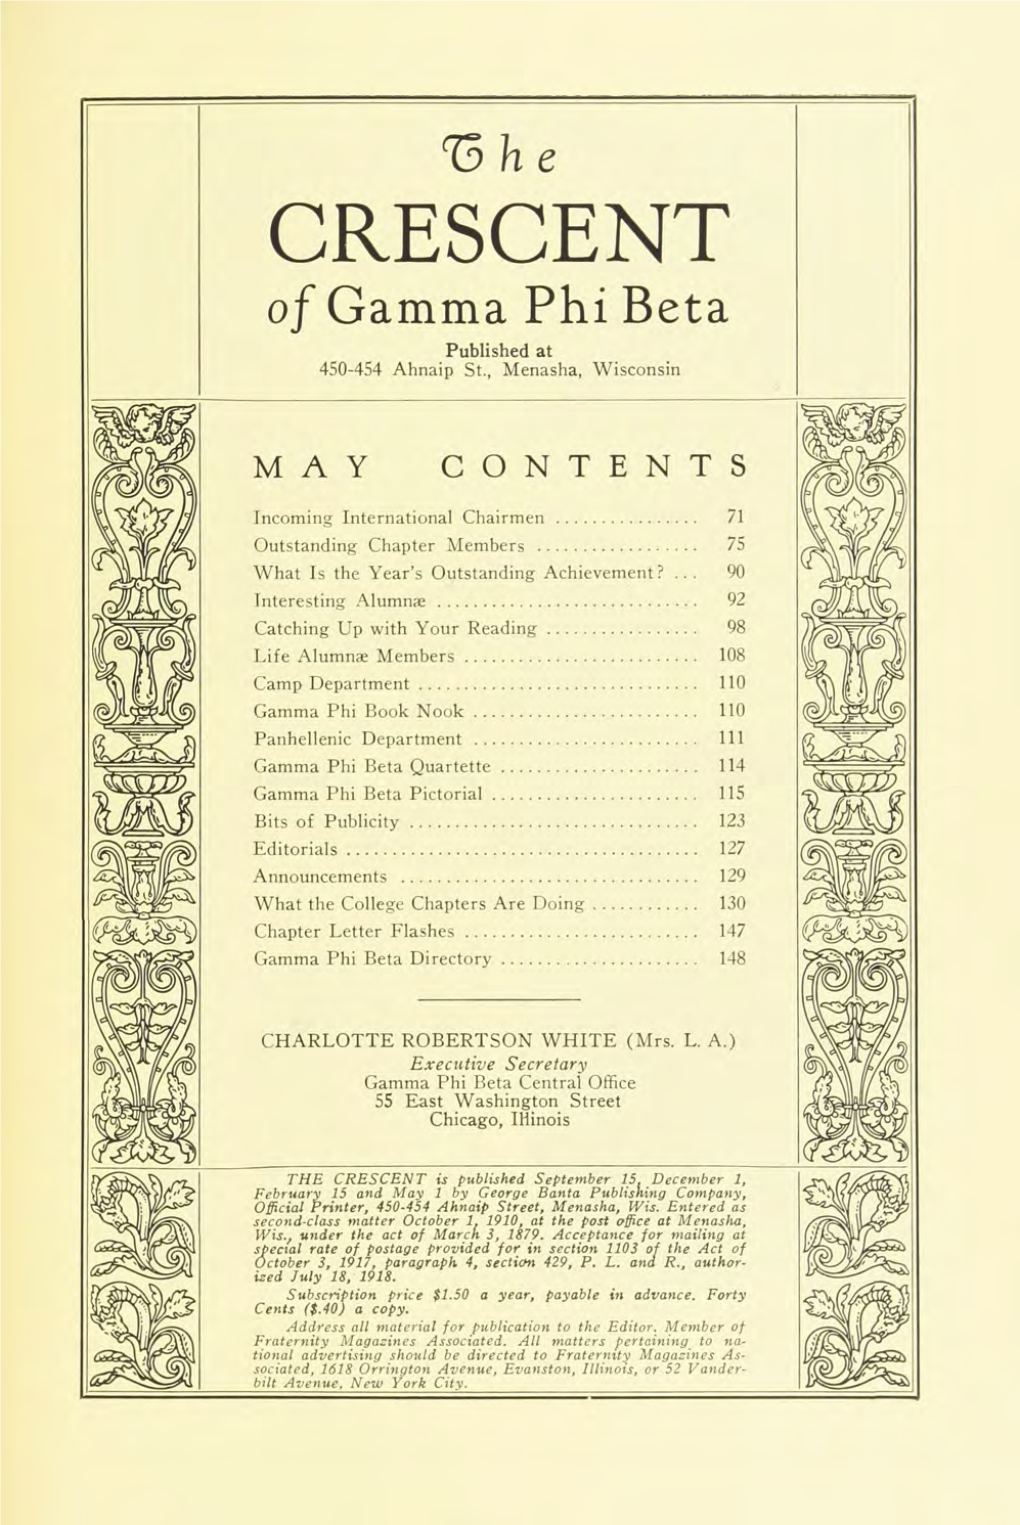 Of Gamma Phi Beta Published at 450-454 Ahnaip St., Menasha, Wisconsin